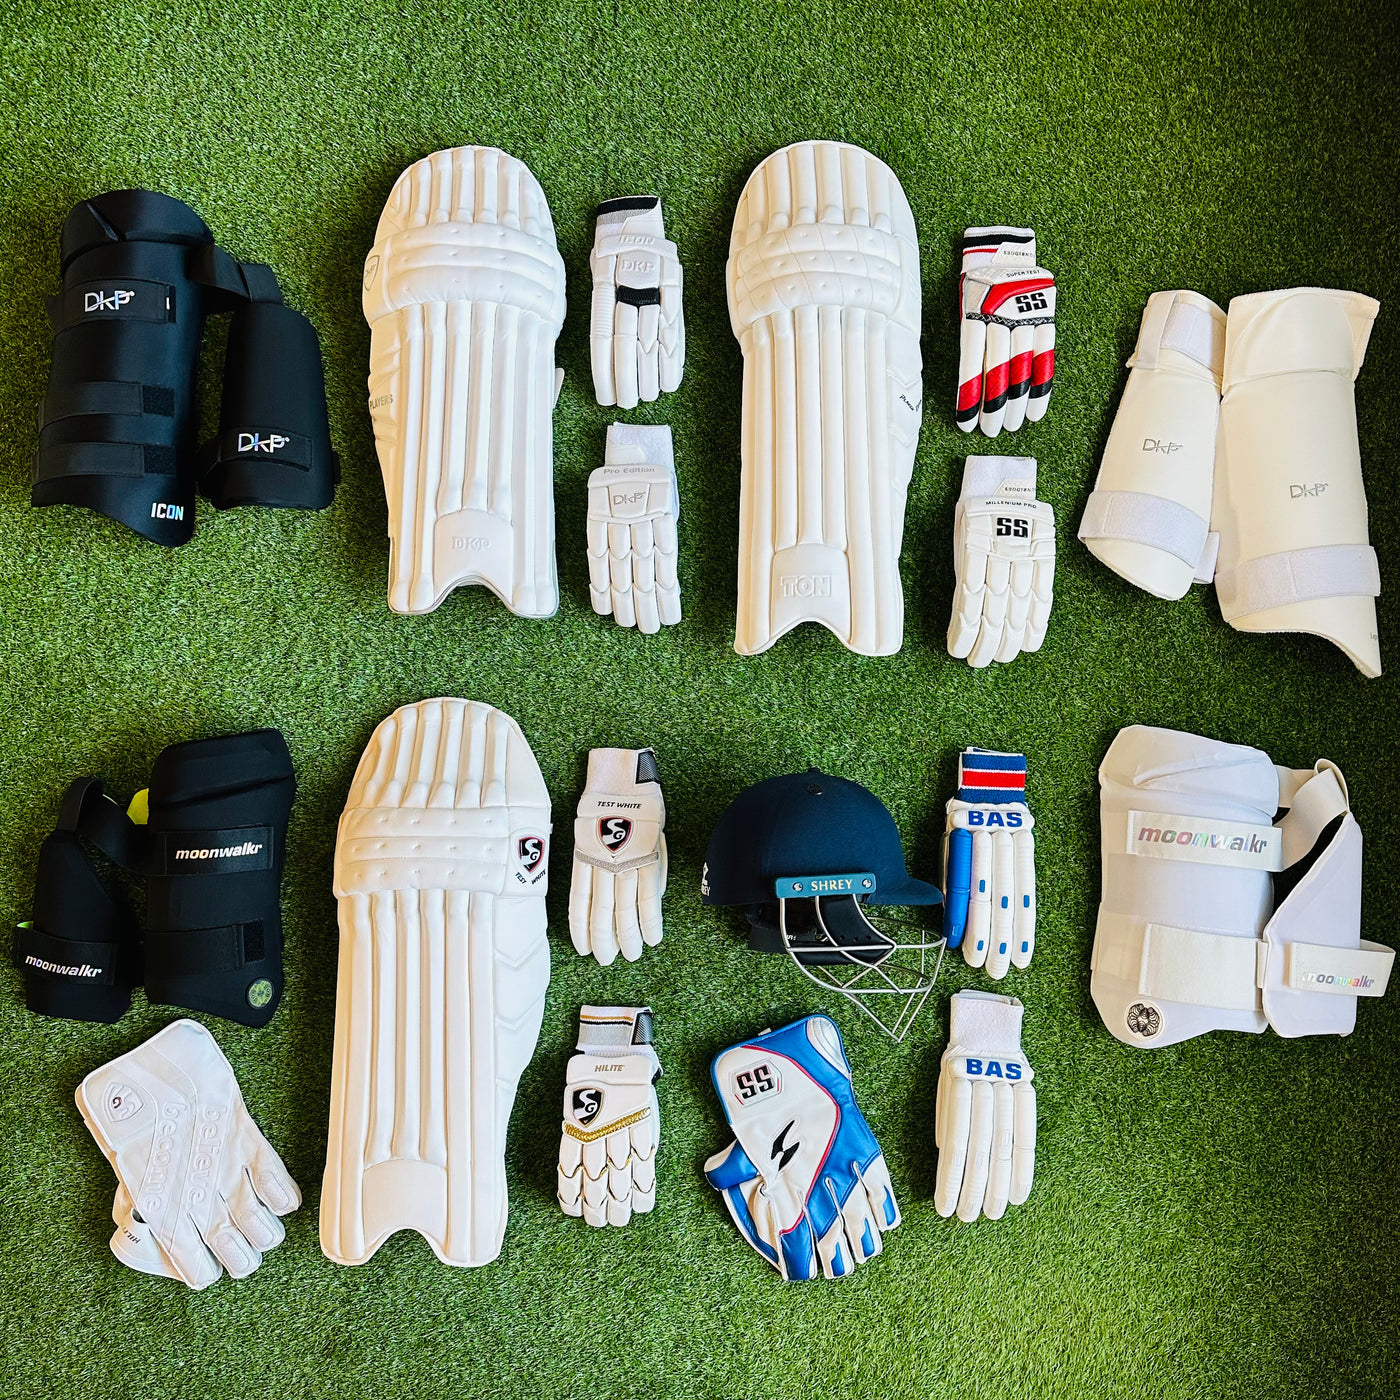 Buy DKP Cricket Protection | Cricket Batting Gloves Sale | Cricket Batting Pads Sale | Cricket Thigh Guard Sale | DKP Next Day Delivery | Cricket Helmet Sale | Wicket-keeping Equipment Sale 